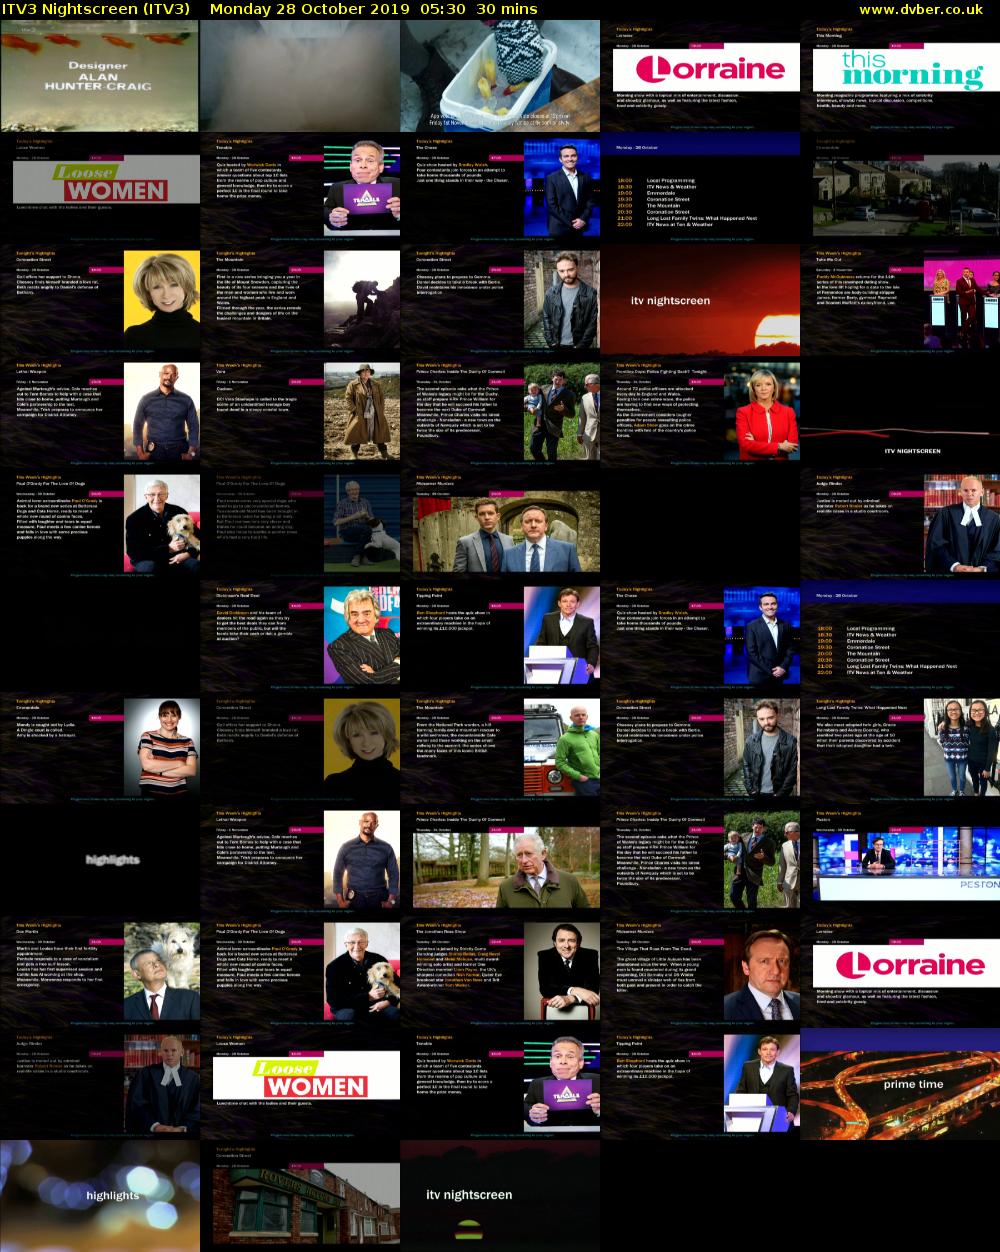 ITV3 Nightscreen (ITV3) Monday 28 October 2019 05:30 - 06:00